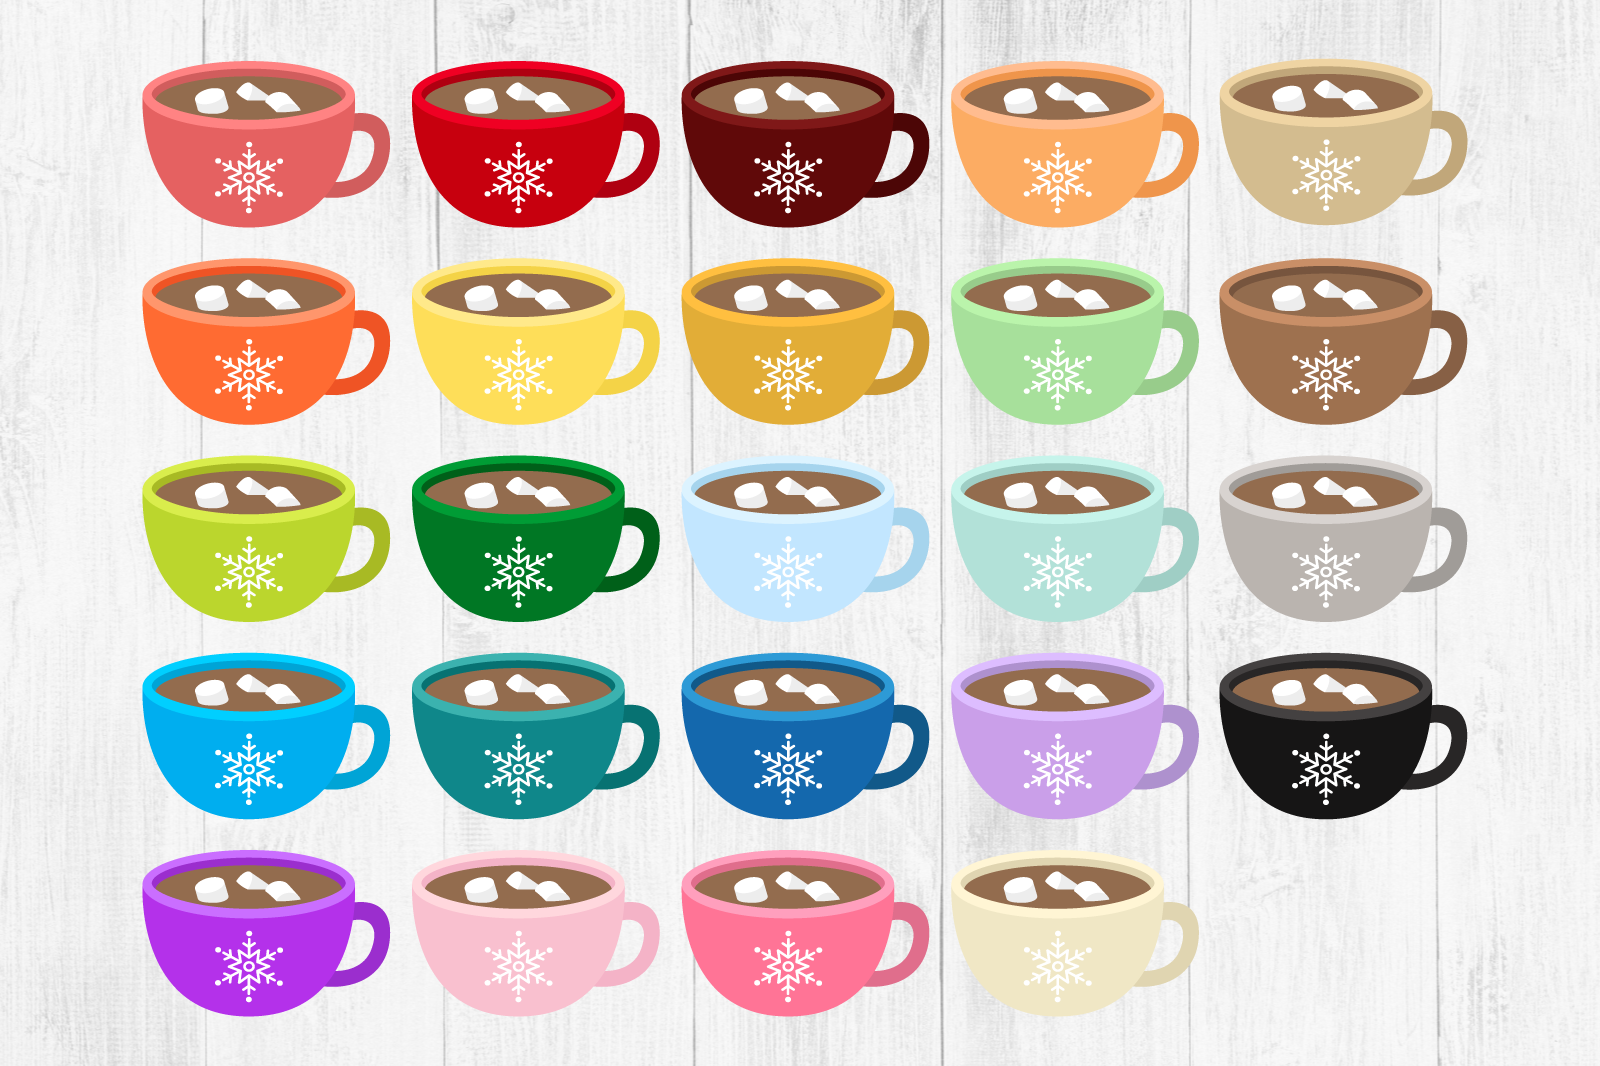 hot chocolate mug clip art